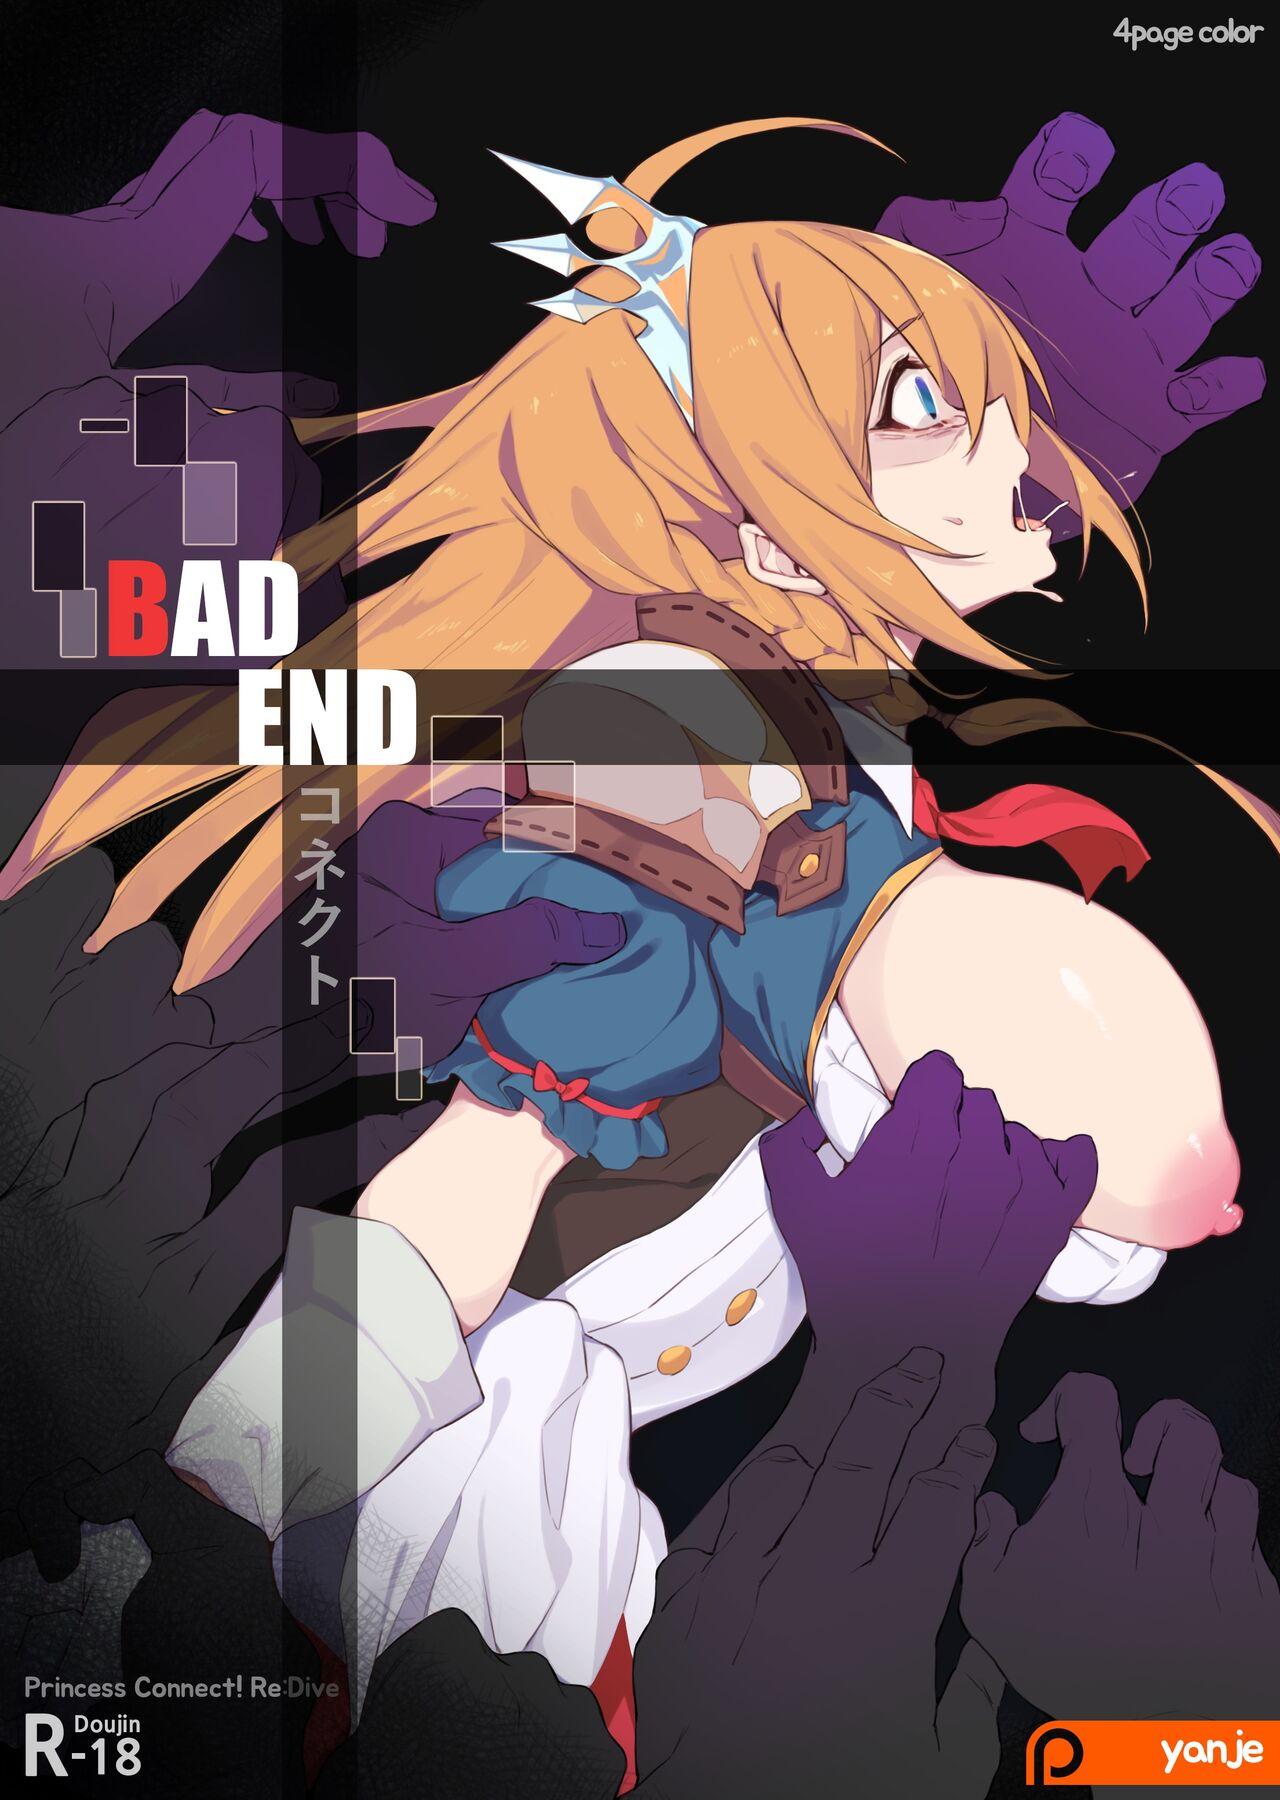 Yanje] Bad End 0